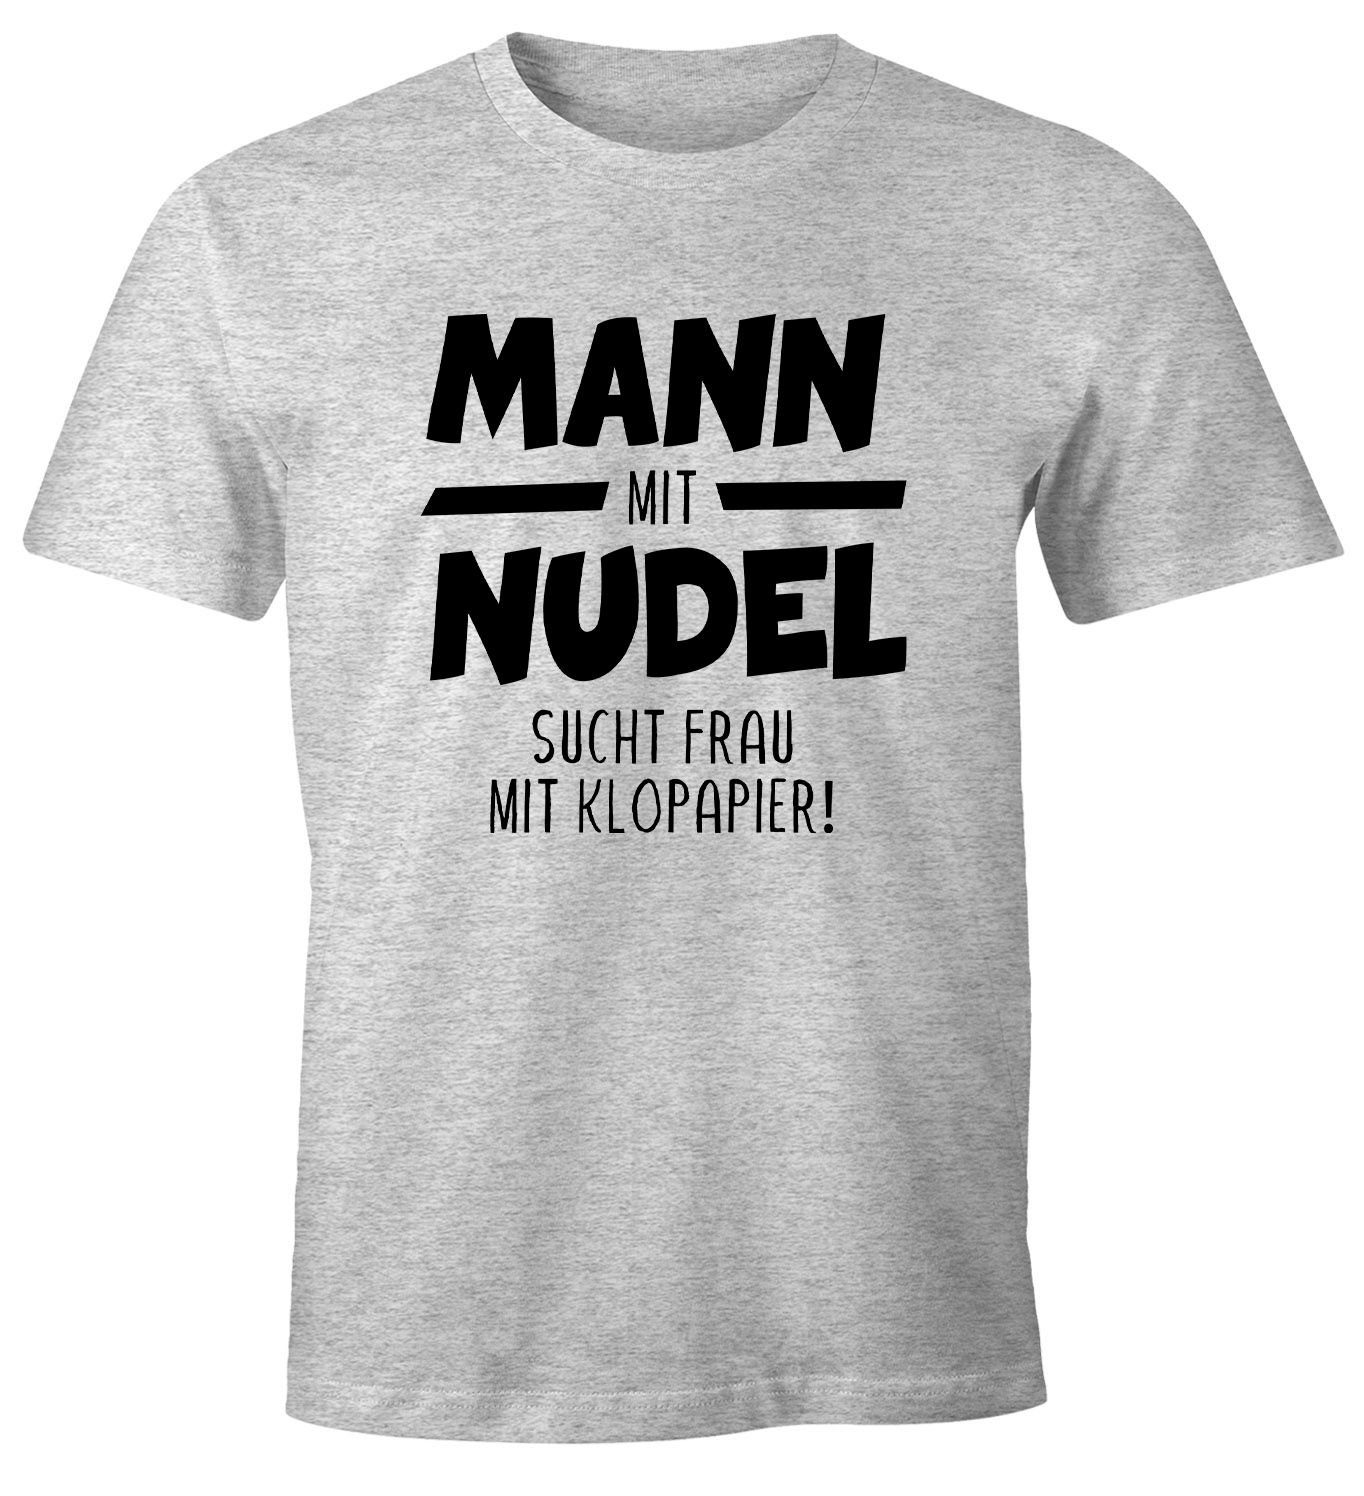 MoonWorks Print-Shirt Herren T-Shirt Mann mit Nudel sucht Frau mit Klopapiier 2020 hamstern bunkern Fun-Shirt Spruch lustig Moonworks® mit Print grau